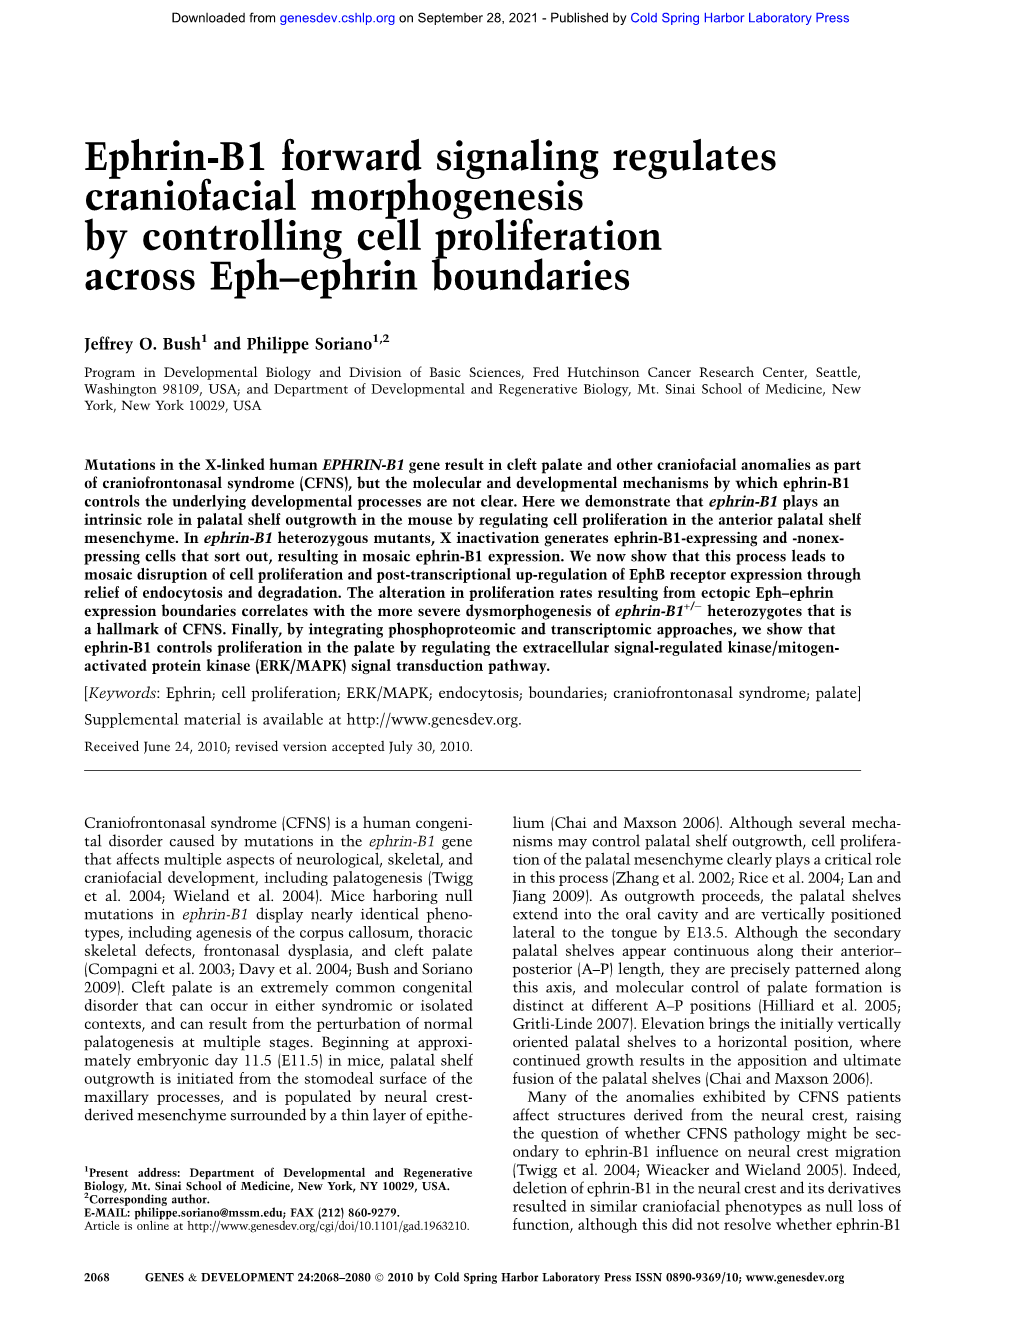 Ephrin-B1 Forward Signaling Regulates Craniofacial Morphogenesis by Controlling Cell Proliferation Across Eph–Ephrin Boundaries